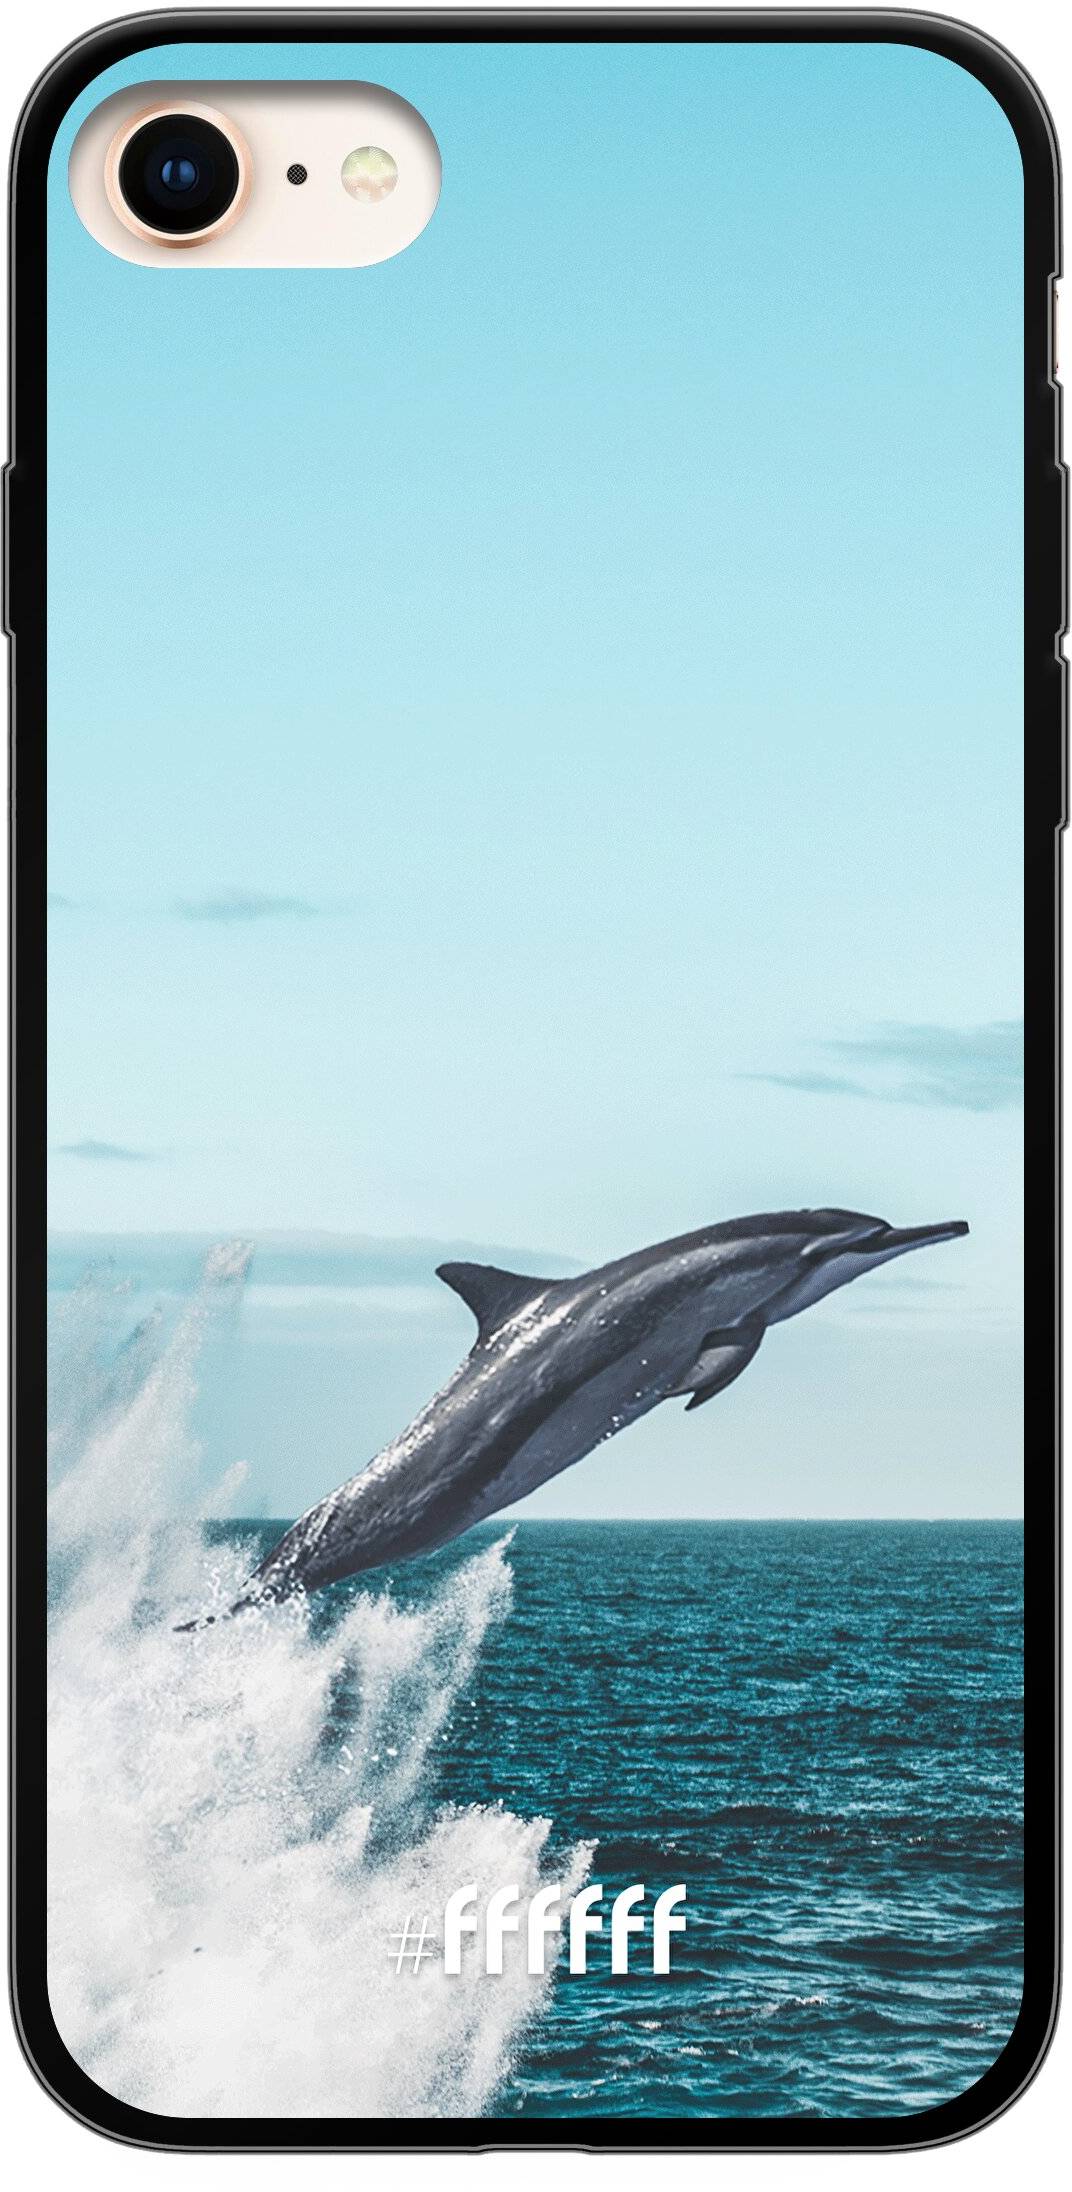 Dolphin iPhone 7